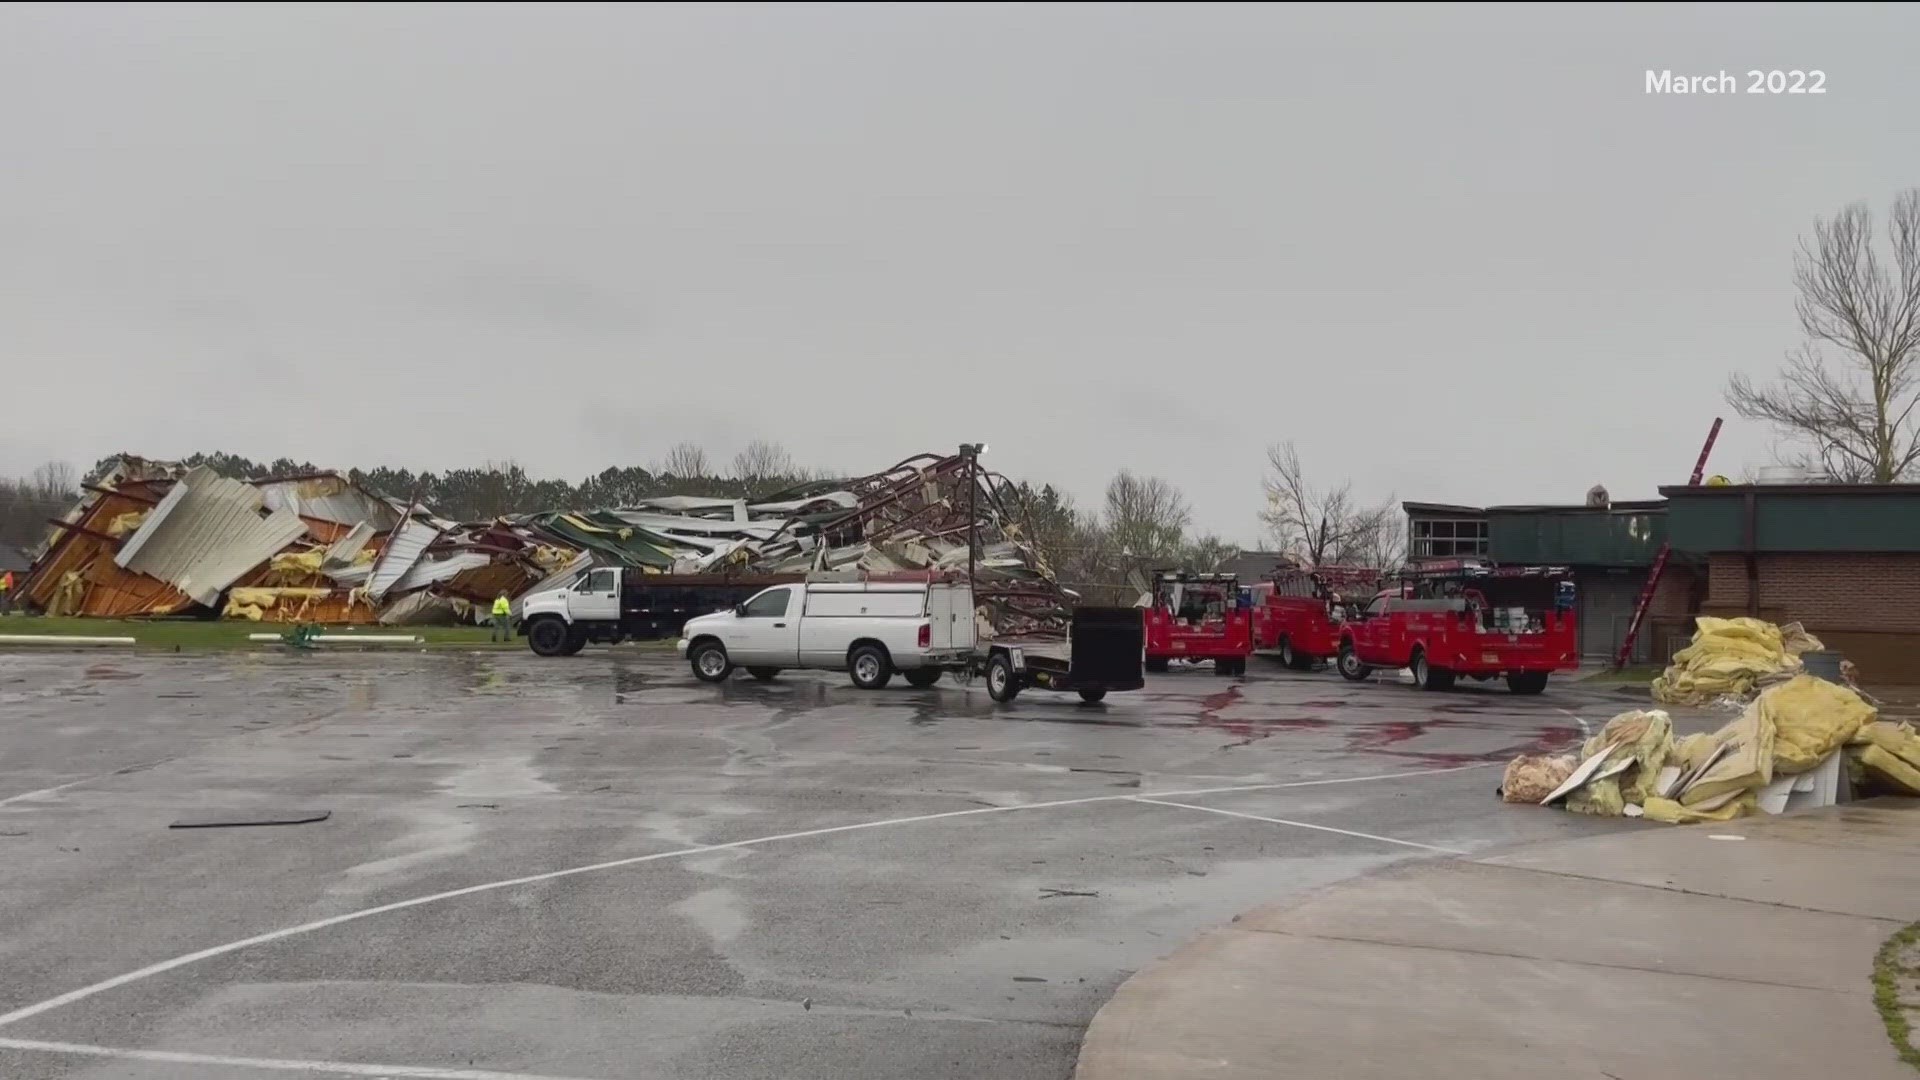 The tornado hit George Elementary School in March 2022.